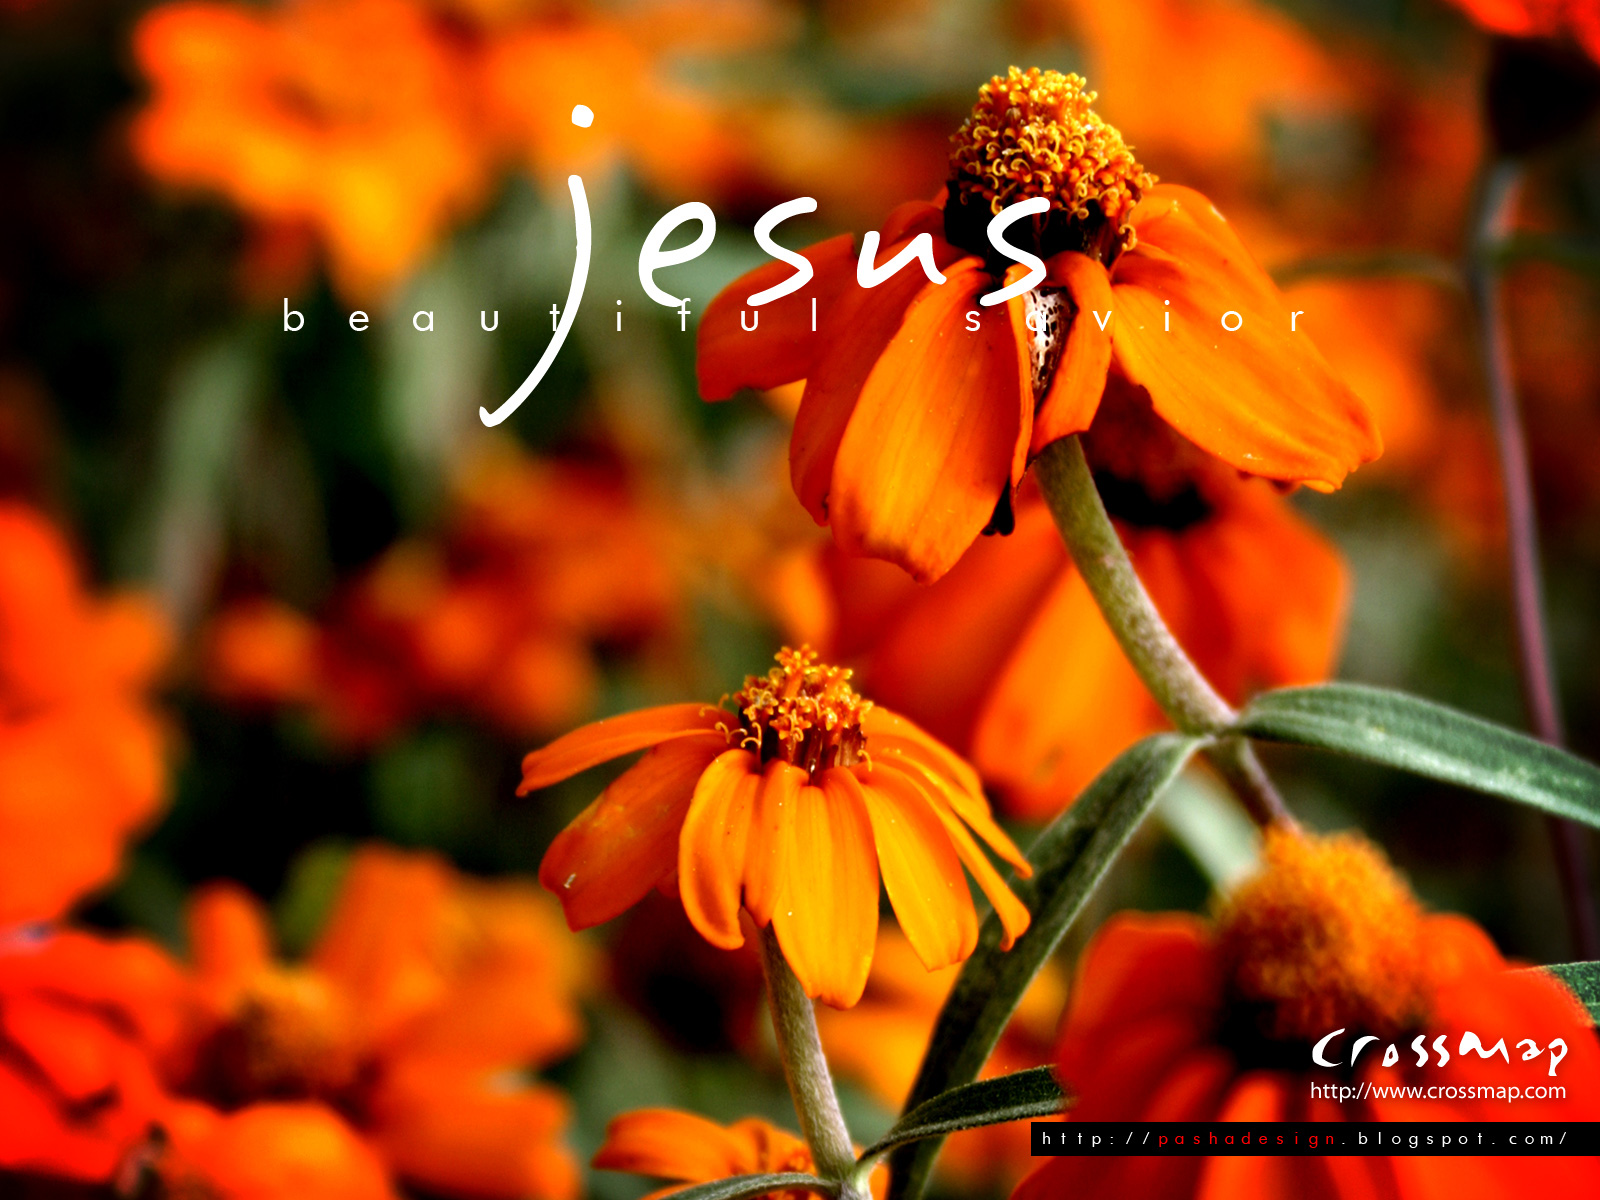 Jesus Beautiful Savior 3 | Christian Photographs | Crossmap ...